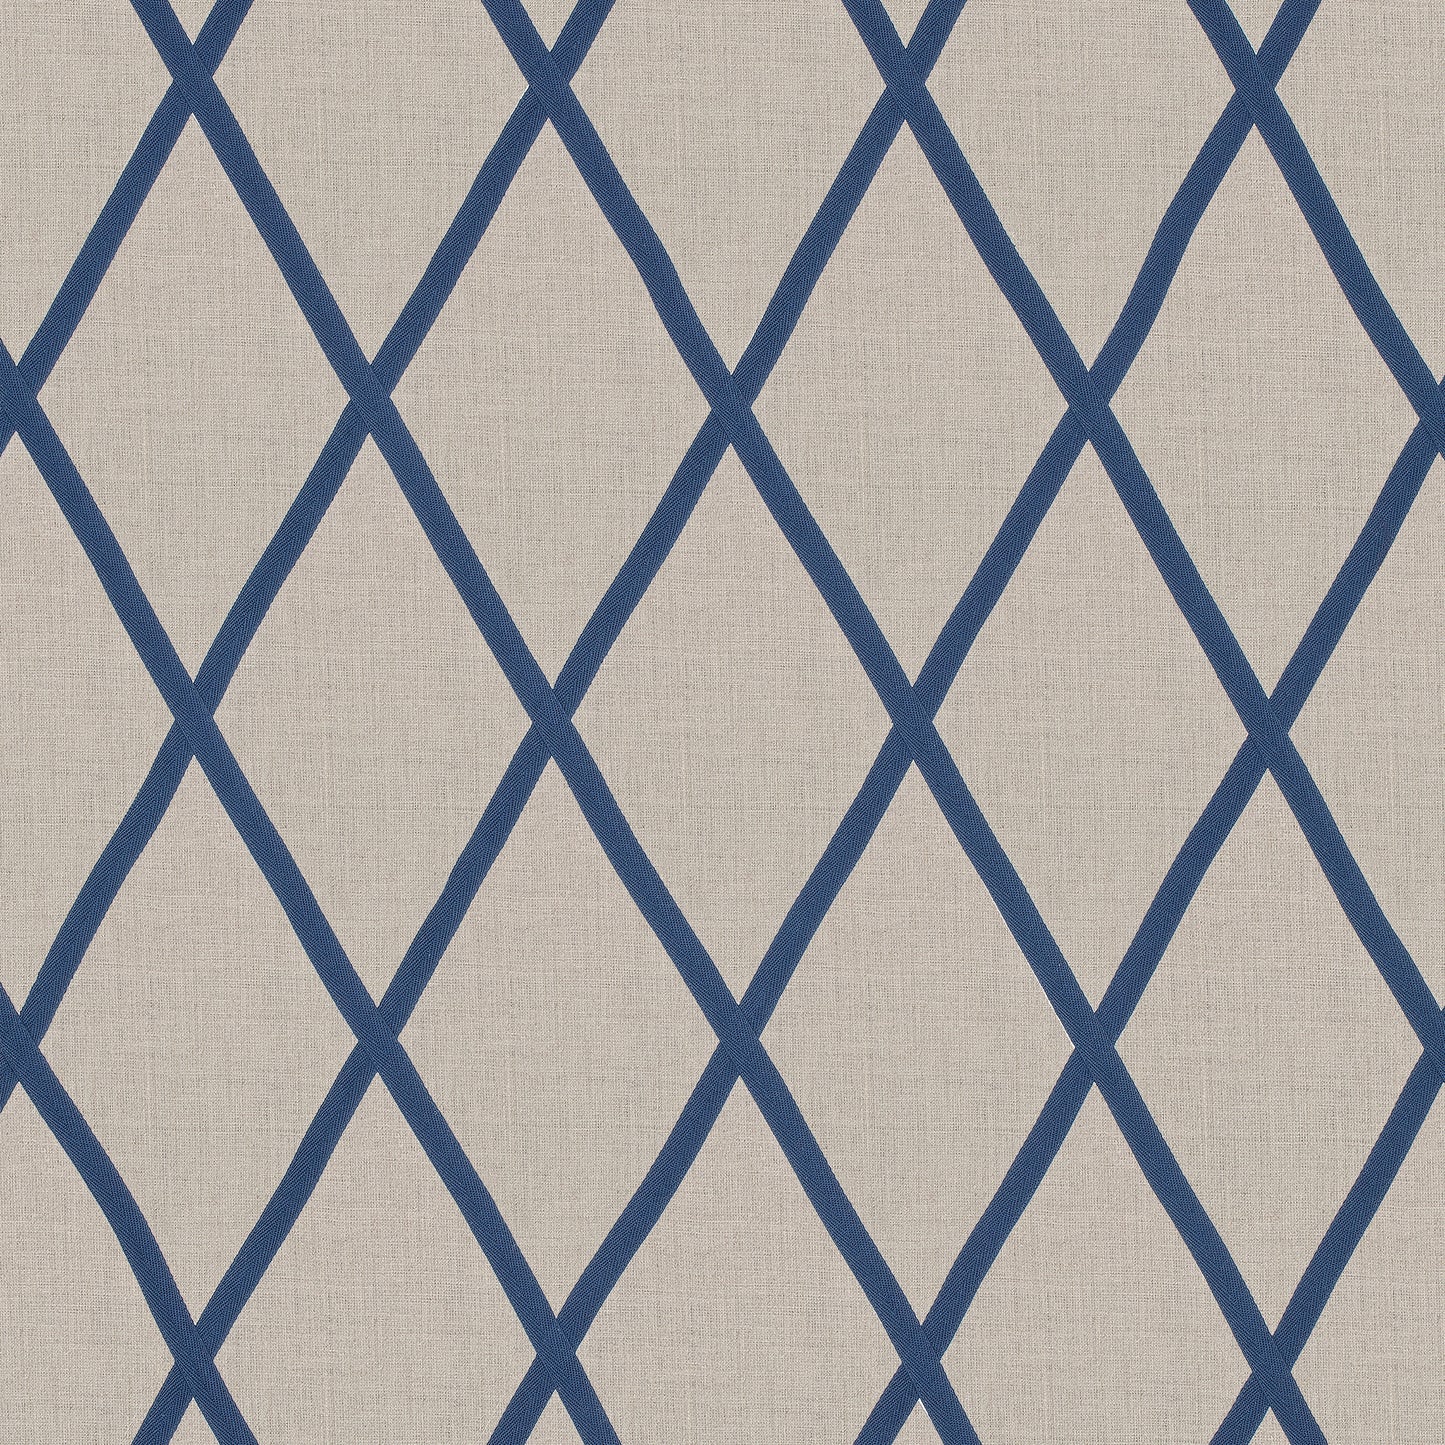 Purchase  Ann French Fabric Product AW78713  pattern name  Tarascon Trellis Applique